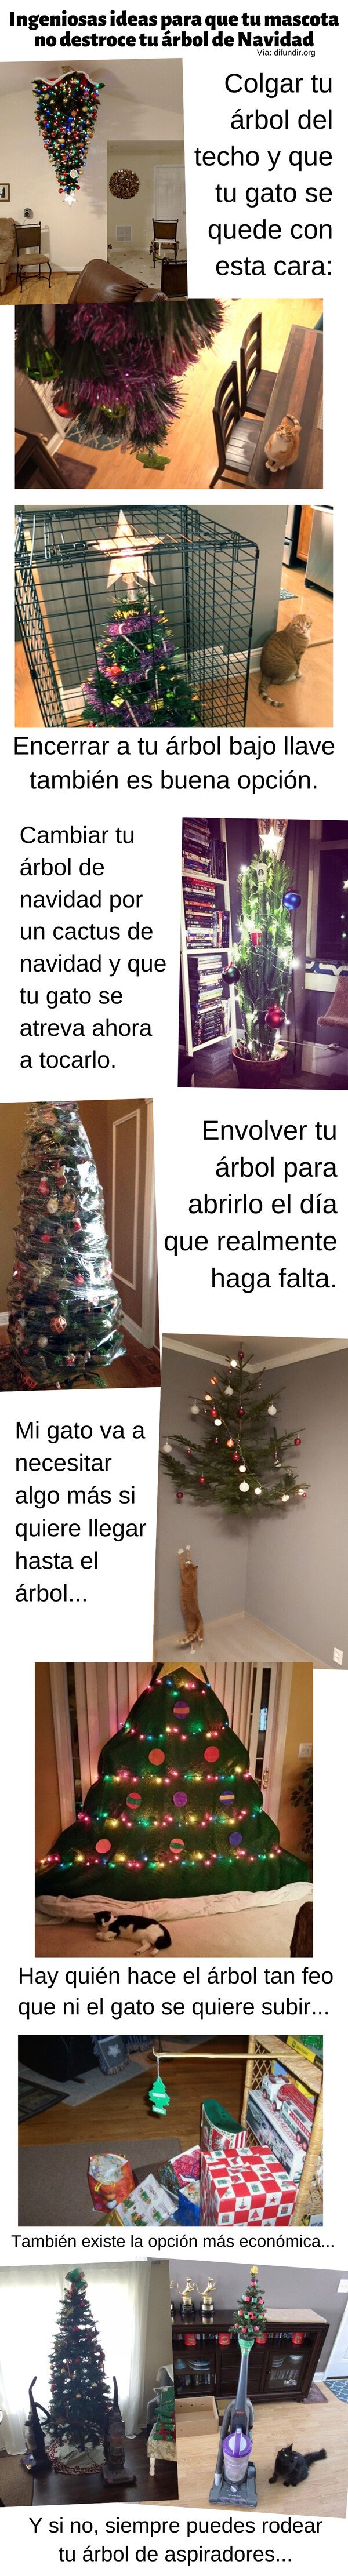 Meme_otros - Ingeniosas ideas para que tu mascota no destroce tu árbol de navidad